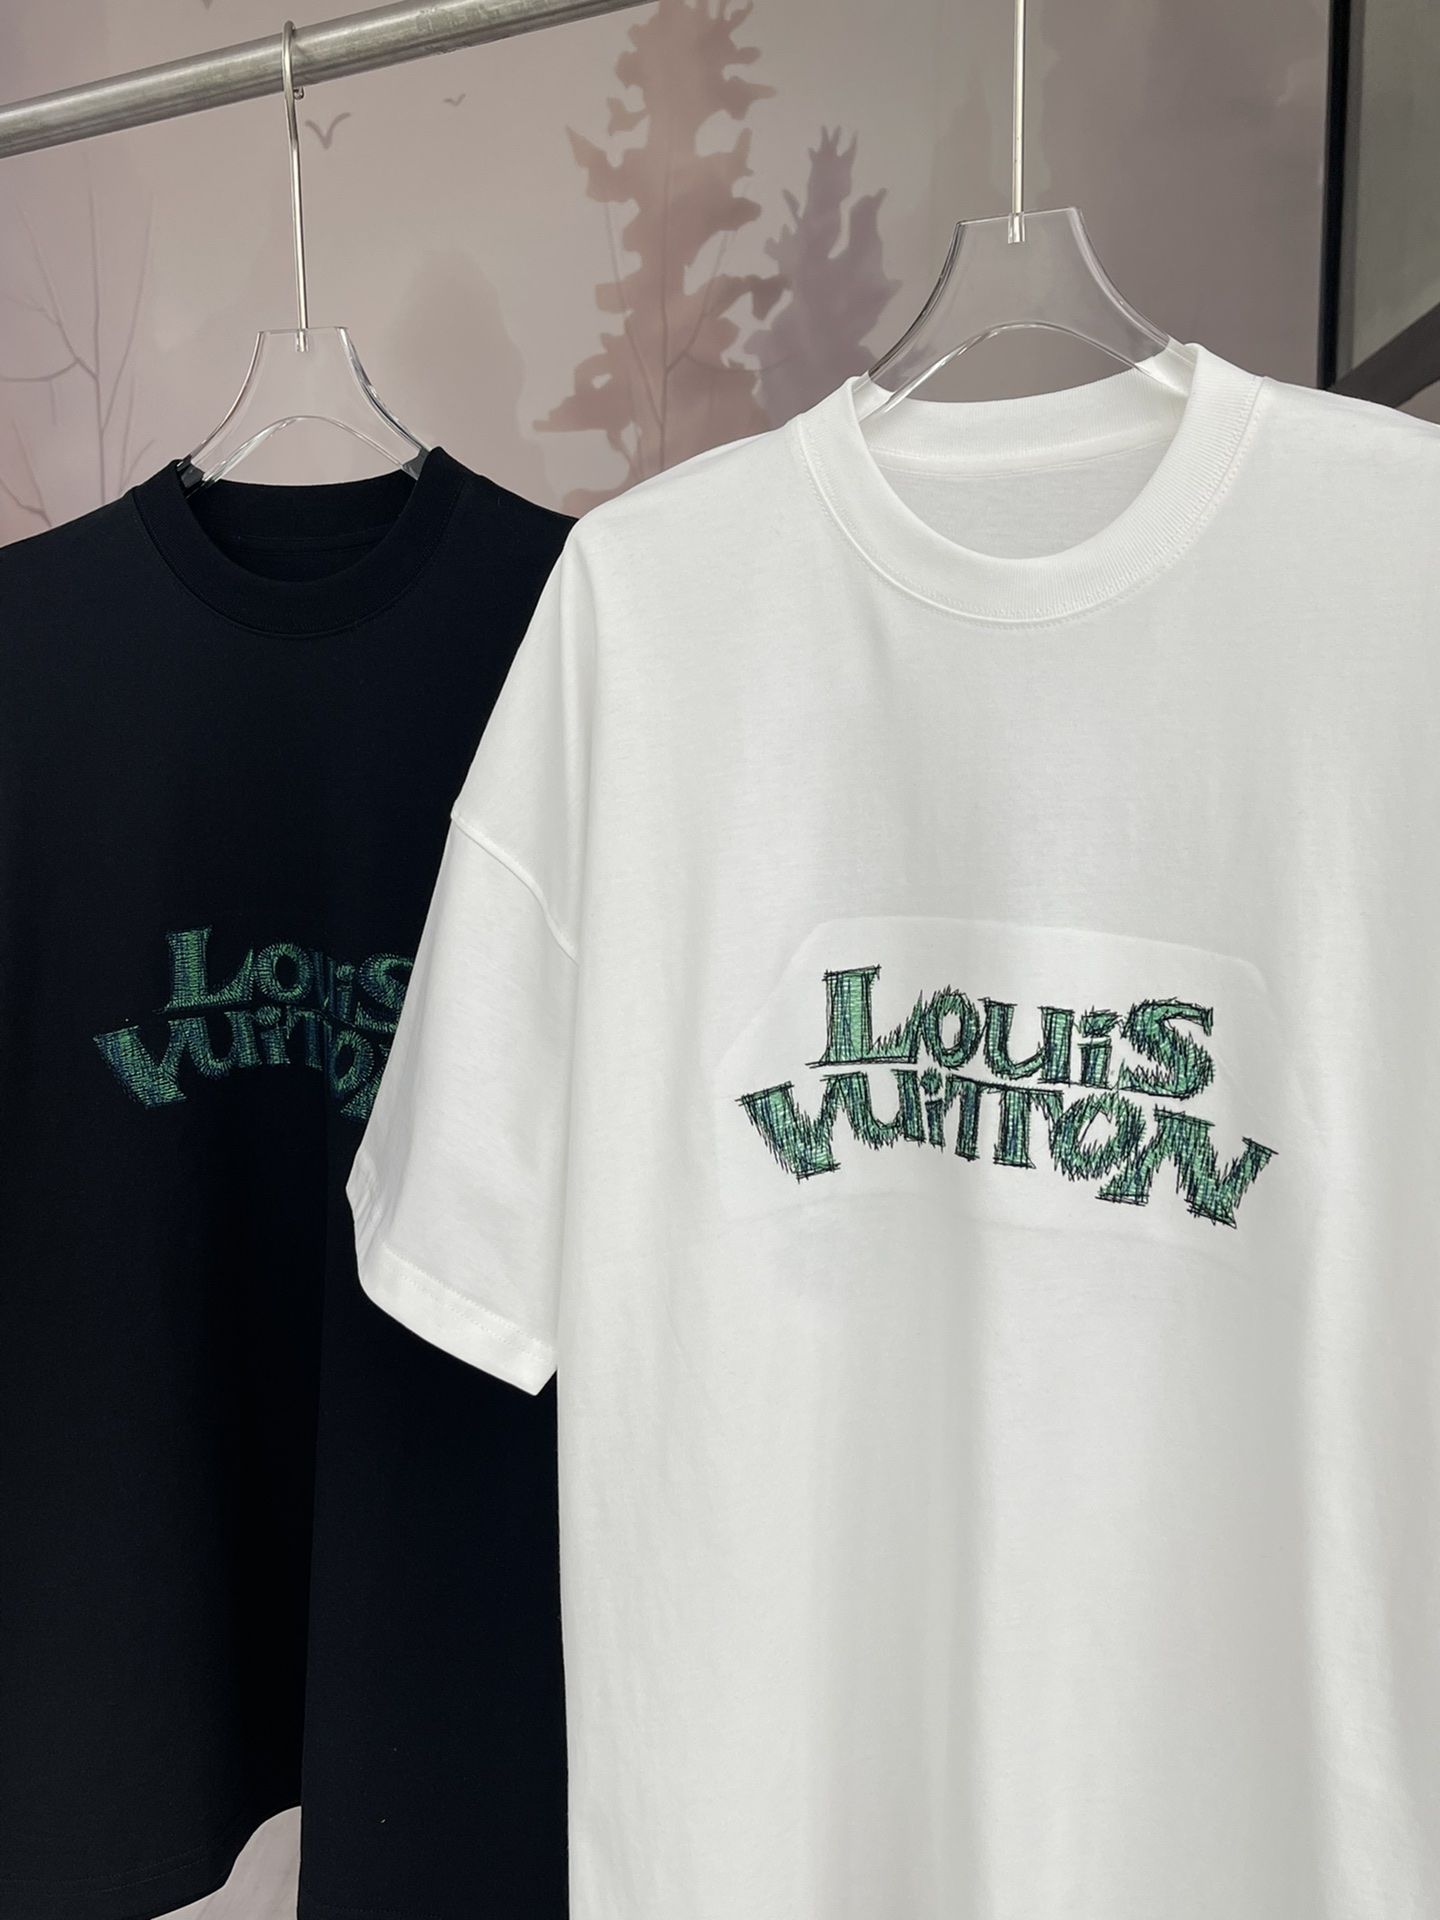 Classic Logo Louis Vuitton Shirt LV T tpkj1